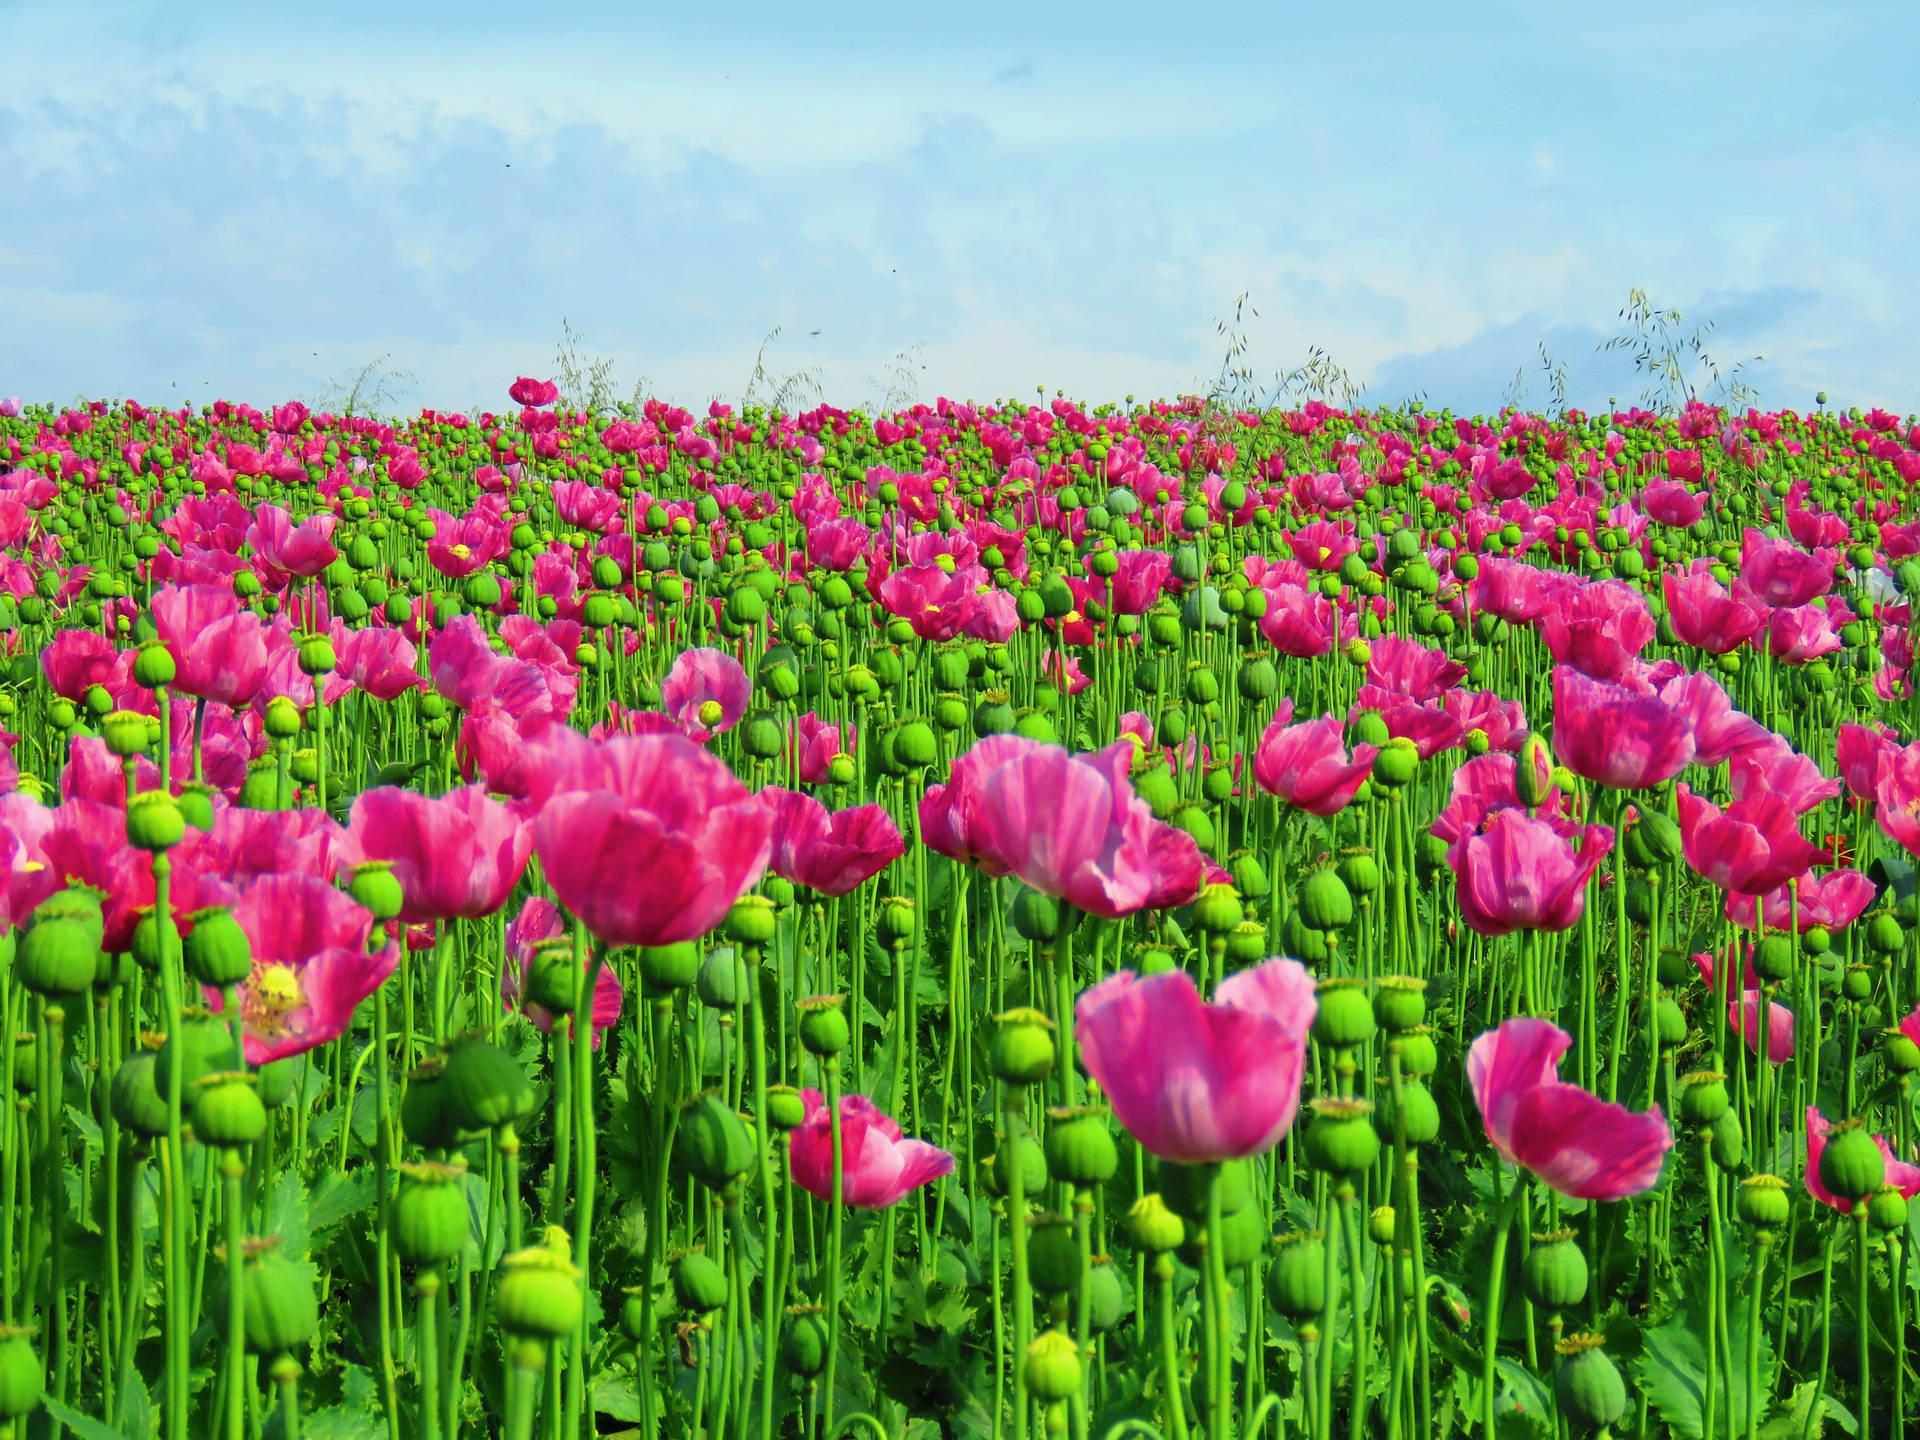 Opium Poppies Field Wallpaper